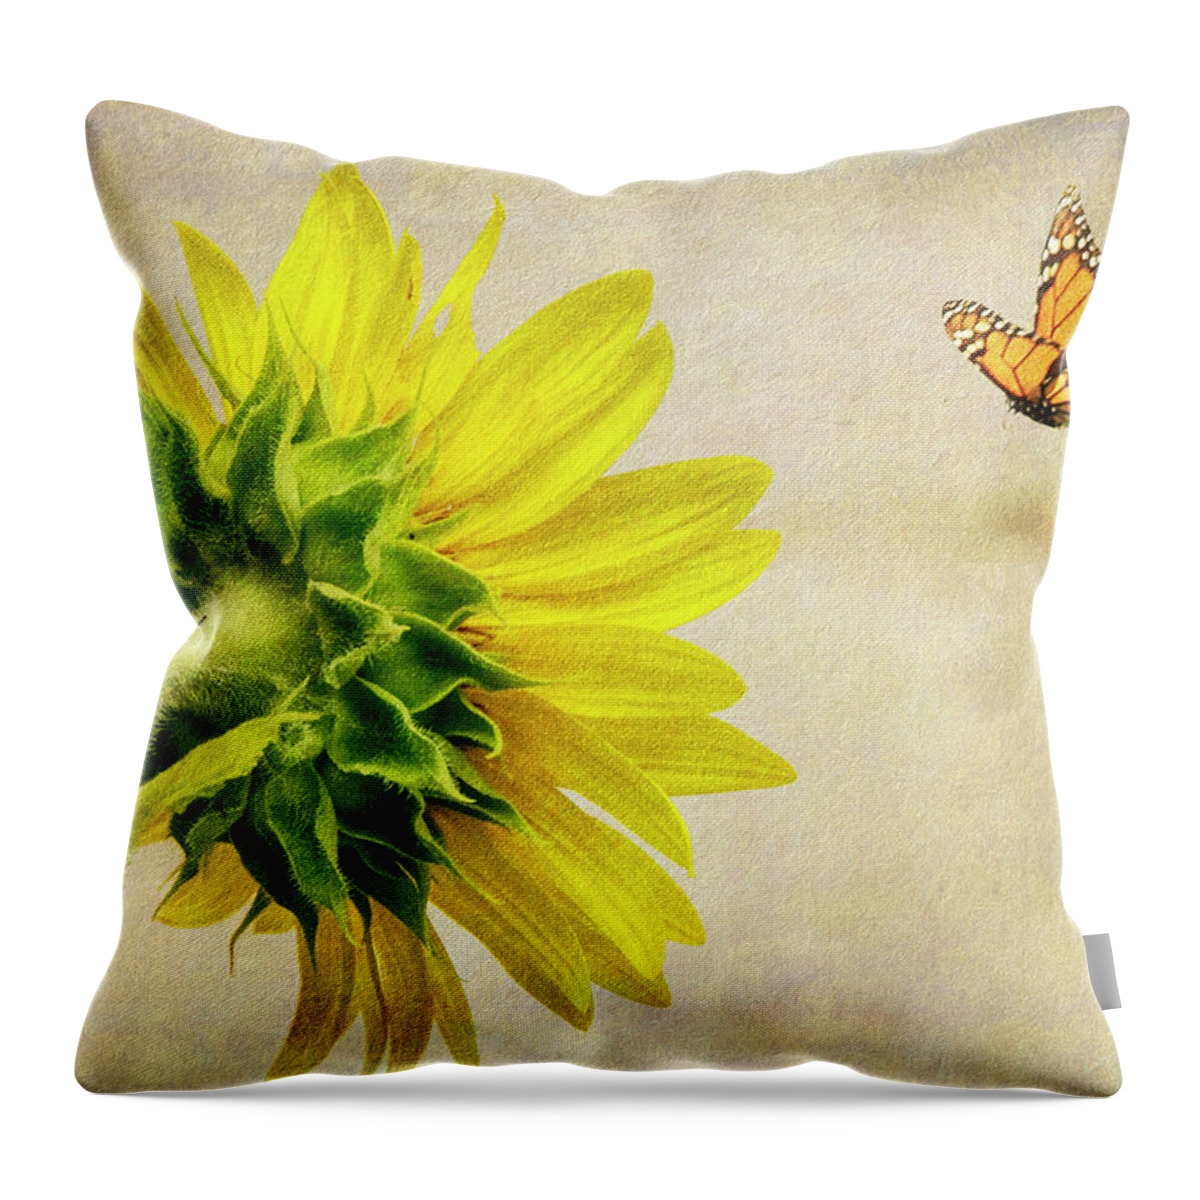 Sunflower Throw Pillow featuring the photograph Summer Sun by Cathy Kovarik